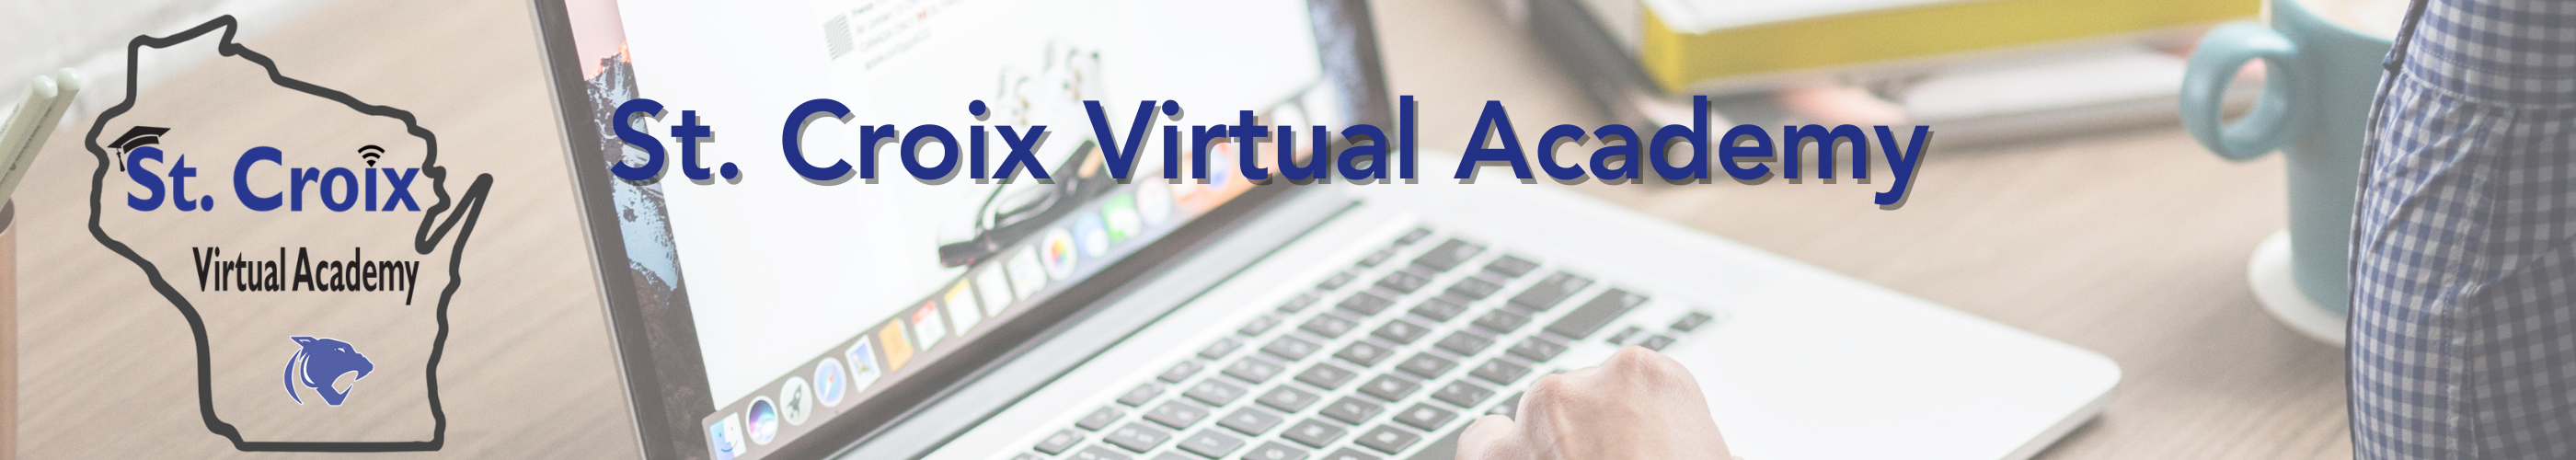 St Croix Virtual Academy